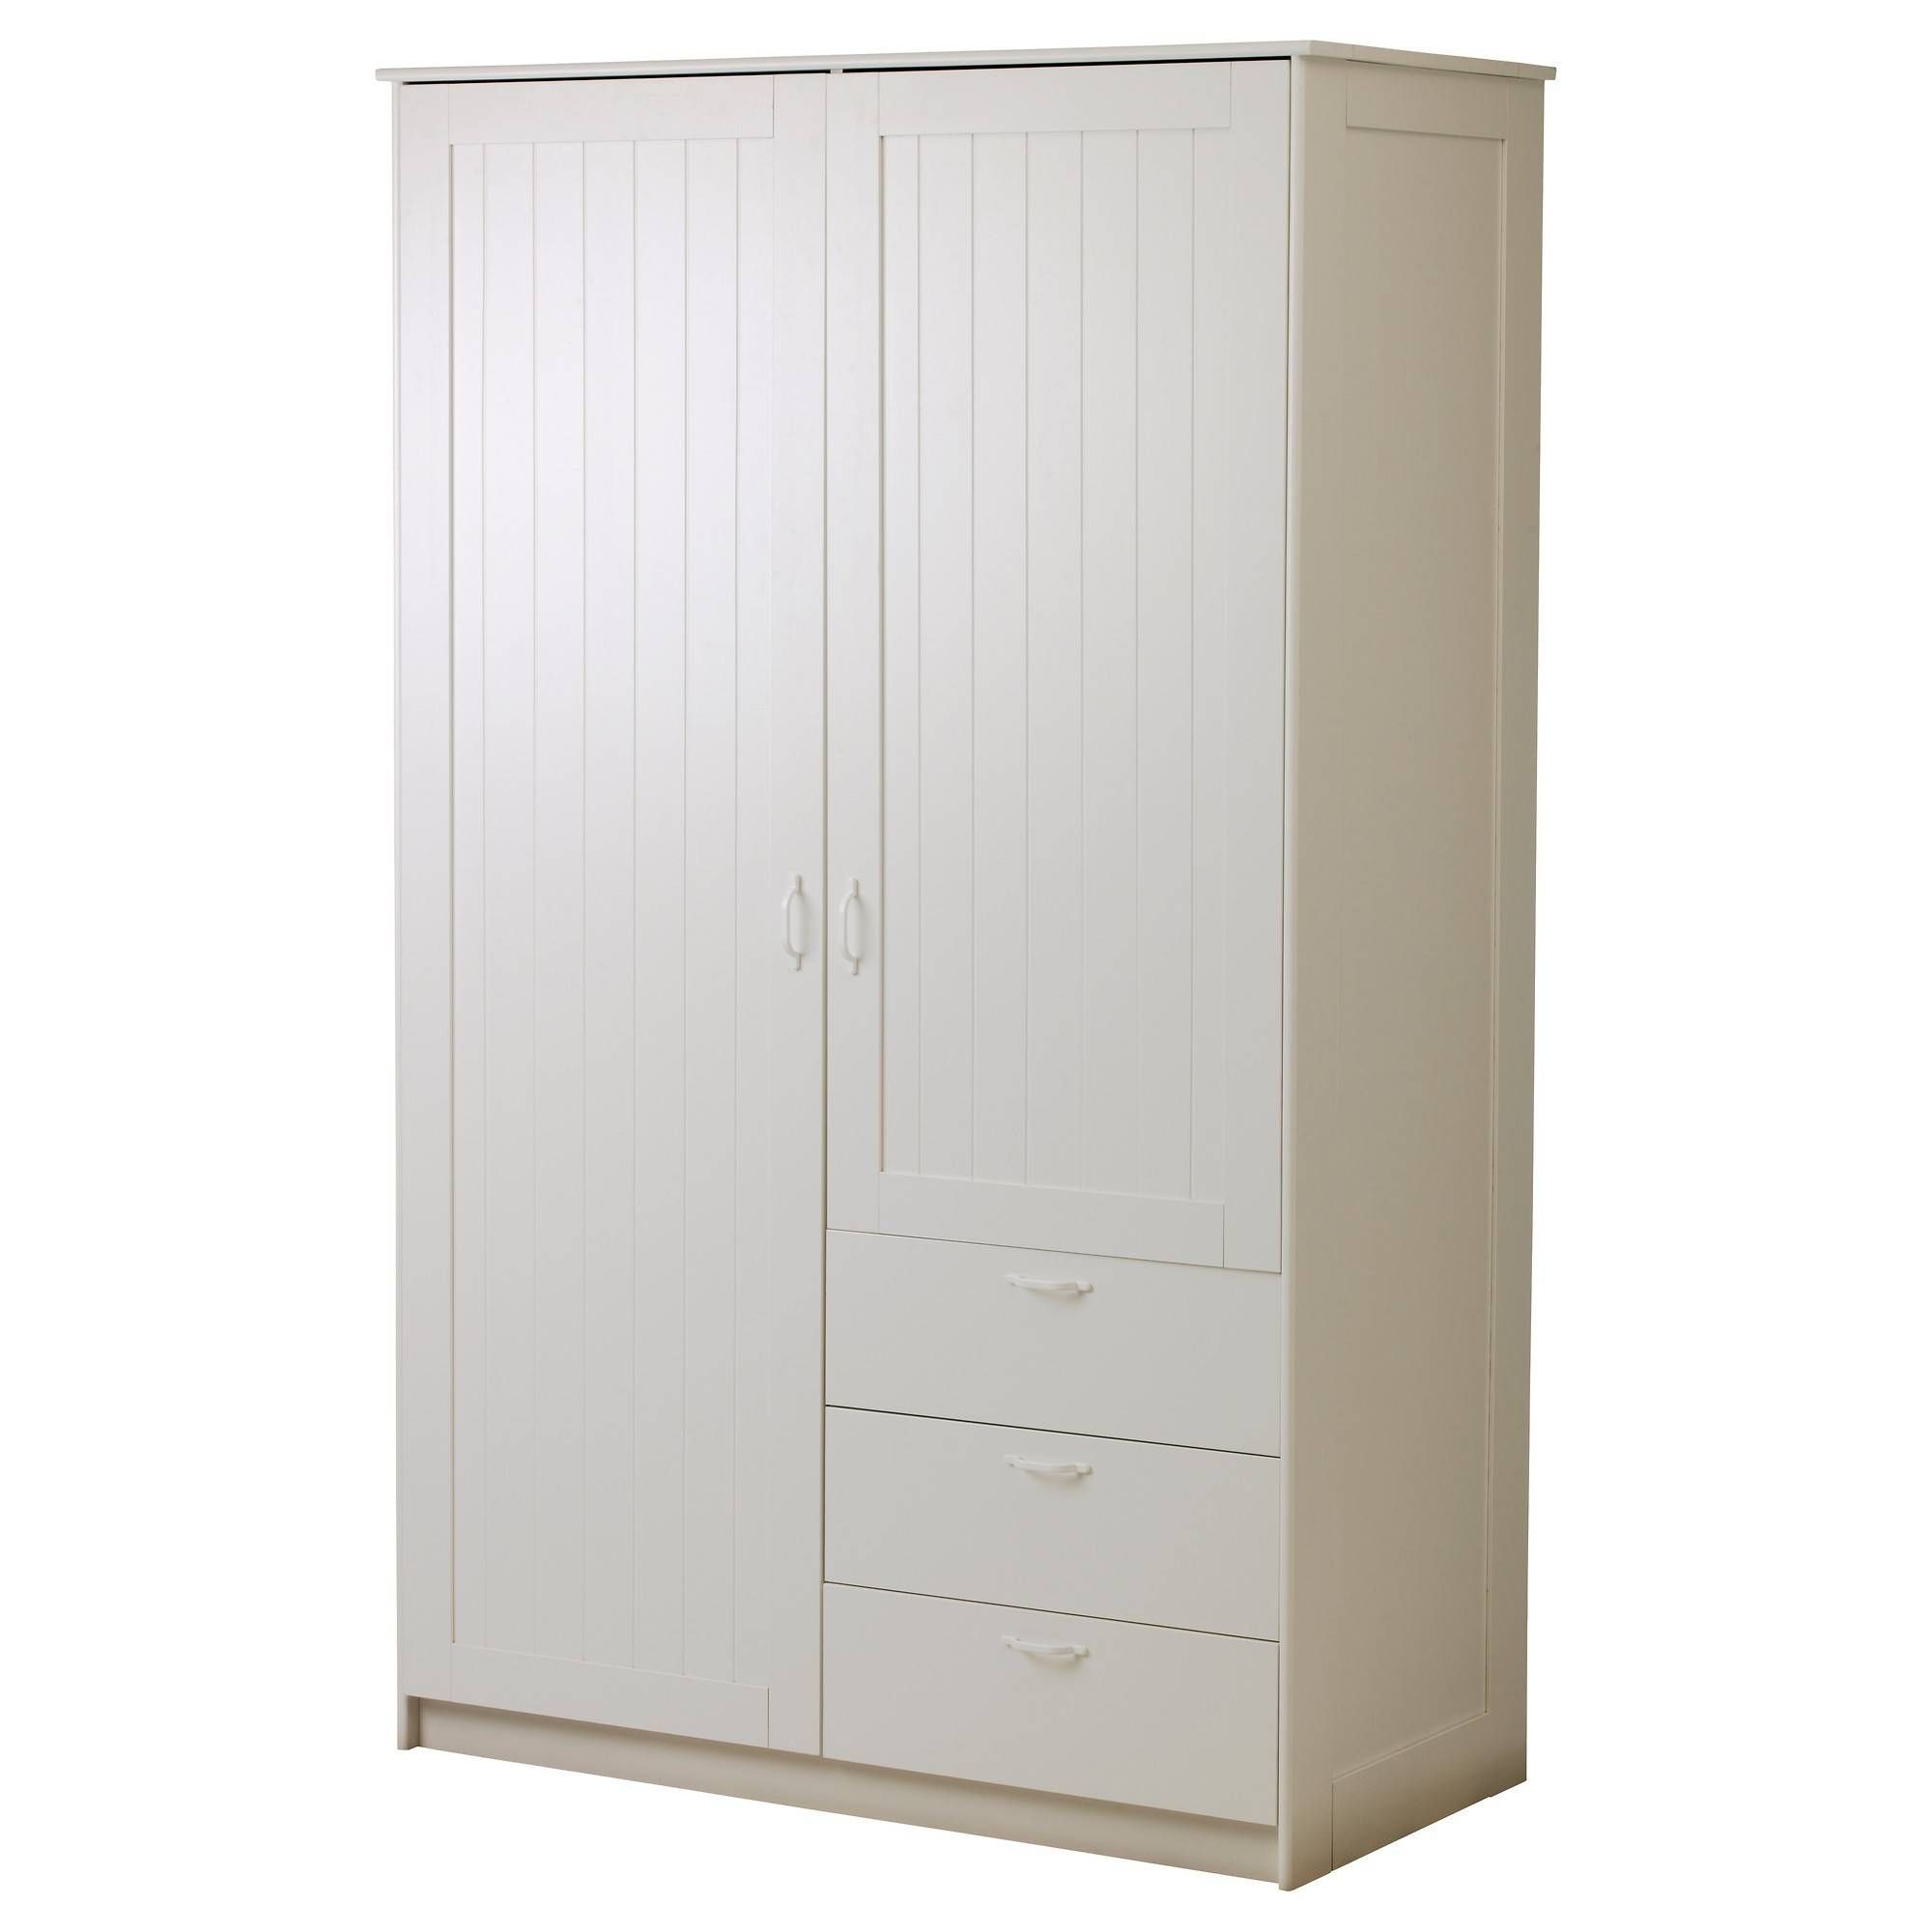 High White Wooden Wardrobe With Storage Also Three Drawers On The Regarding White Wooden Wardrobes (Photo 12 of 15)